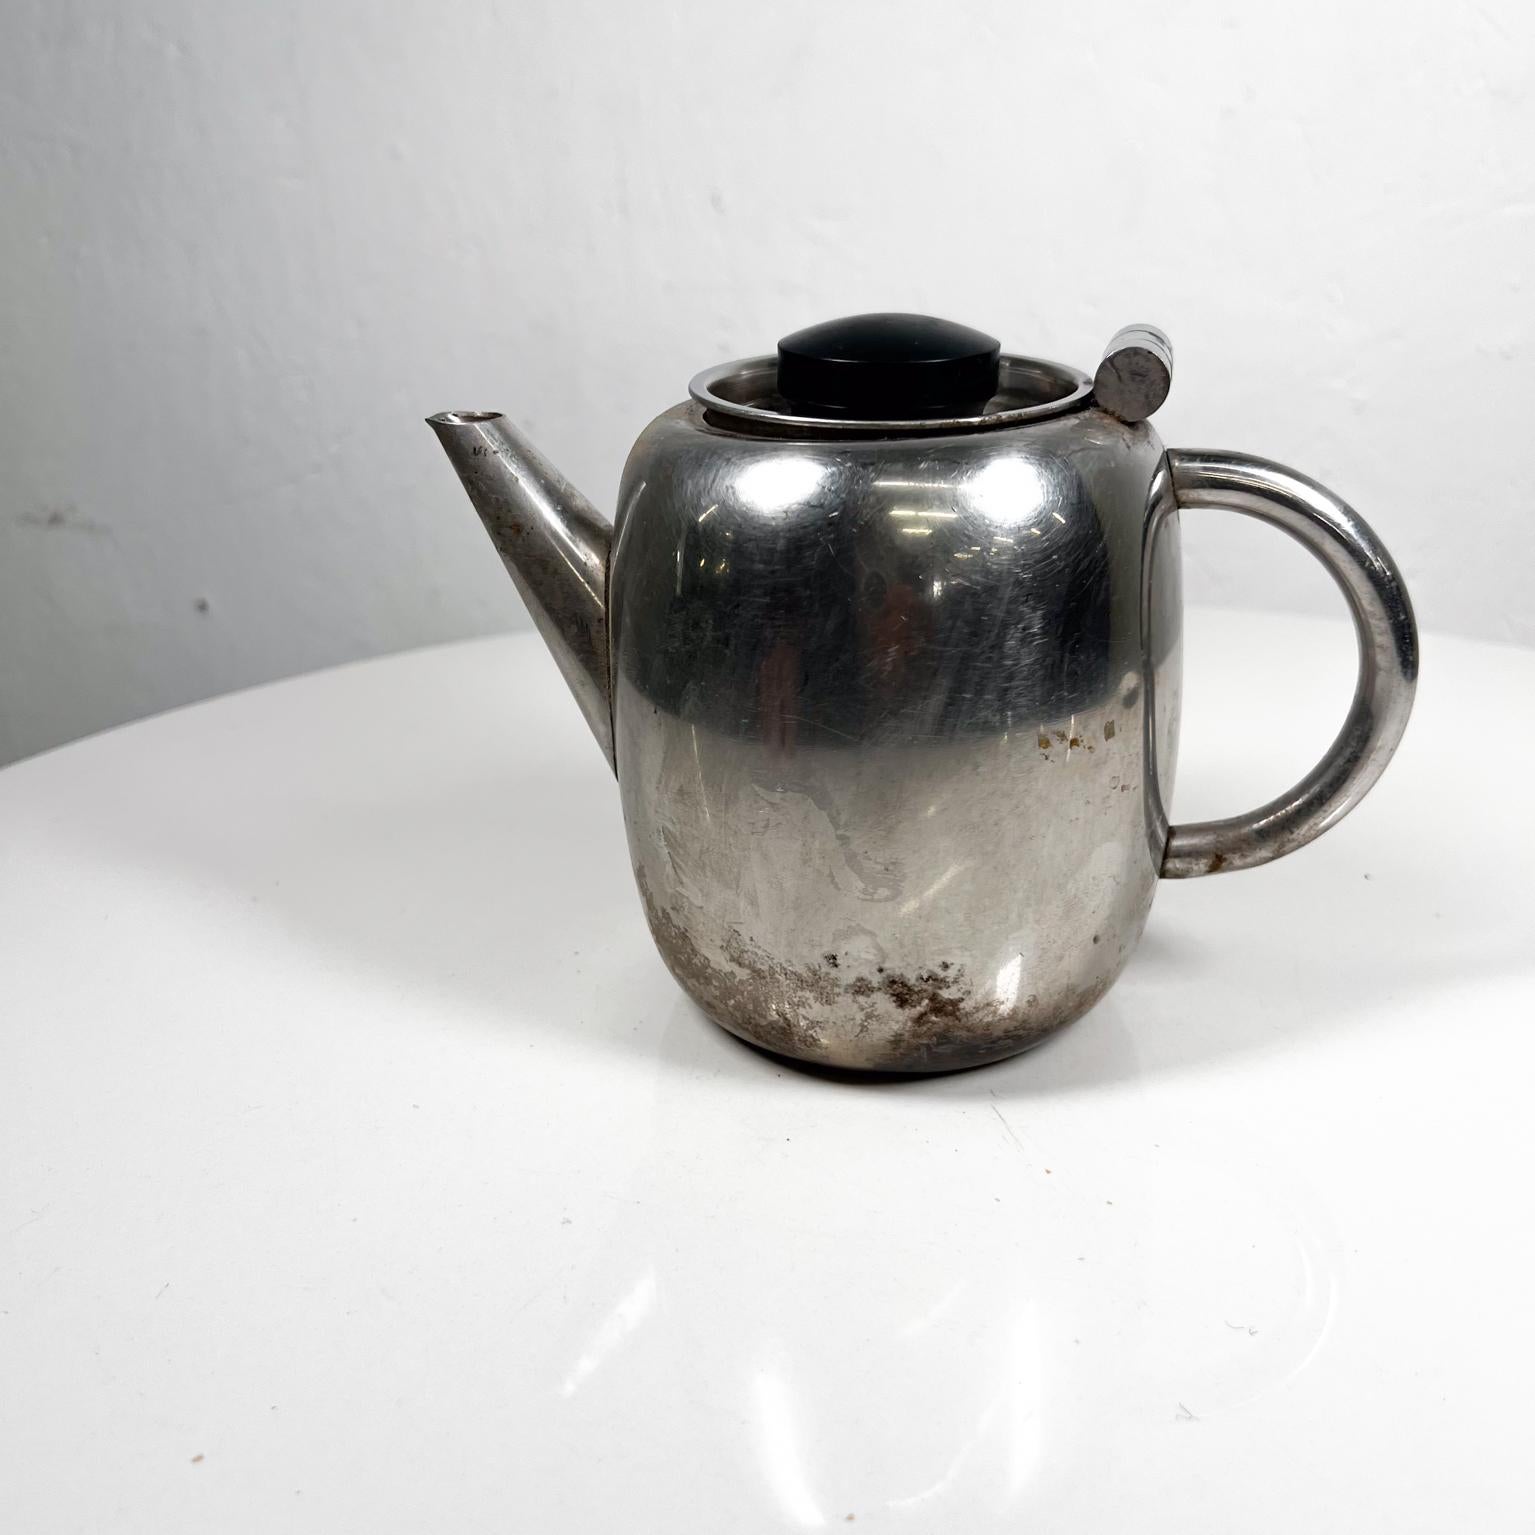 1950s Vintage Art Deco Stylish Small Tea Pot Stainless Steel 1